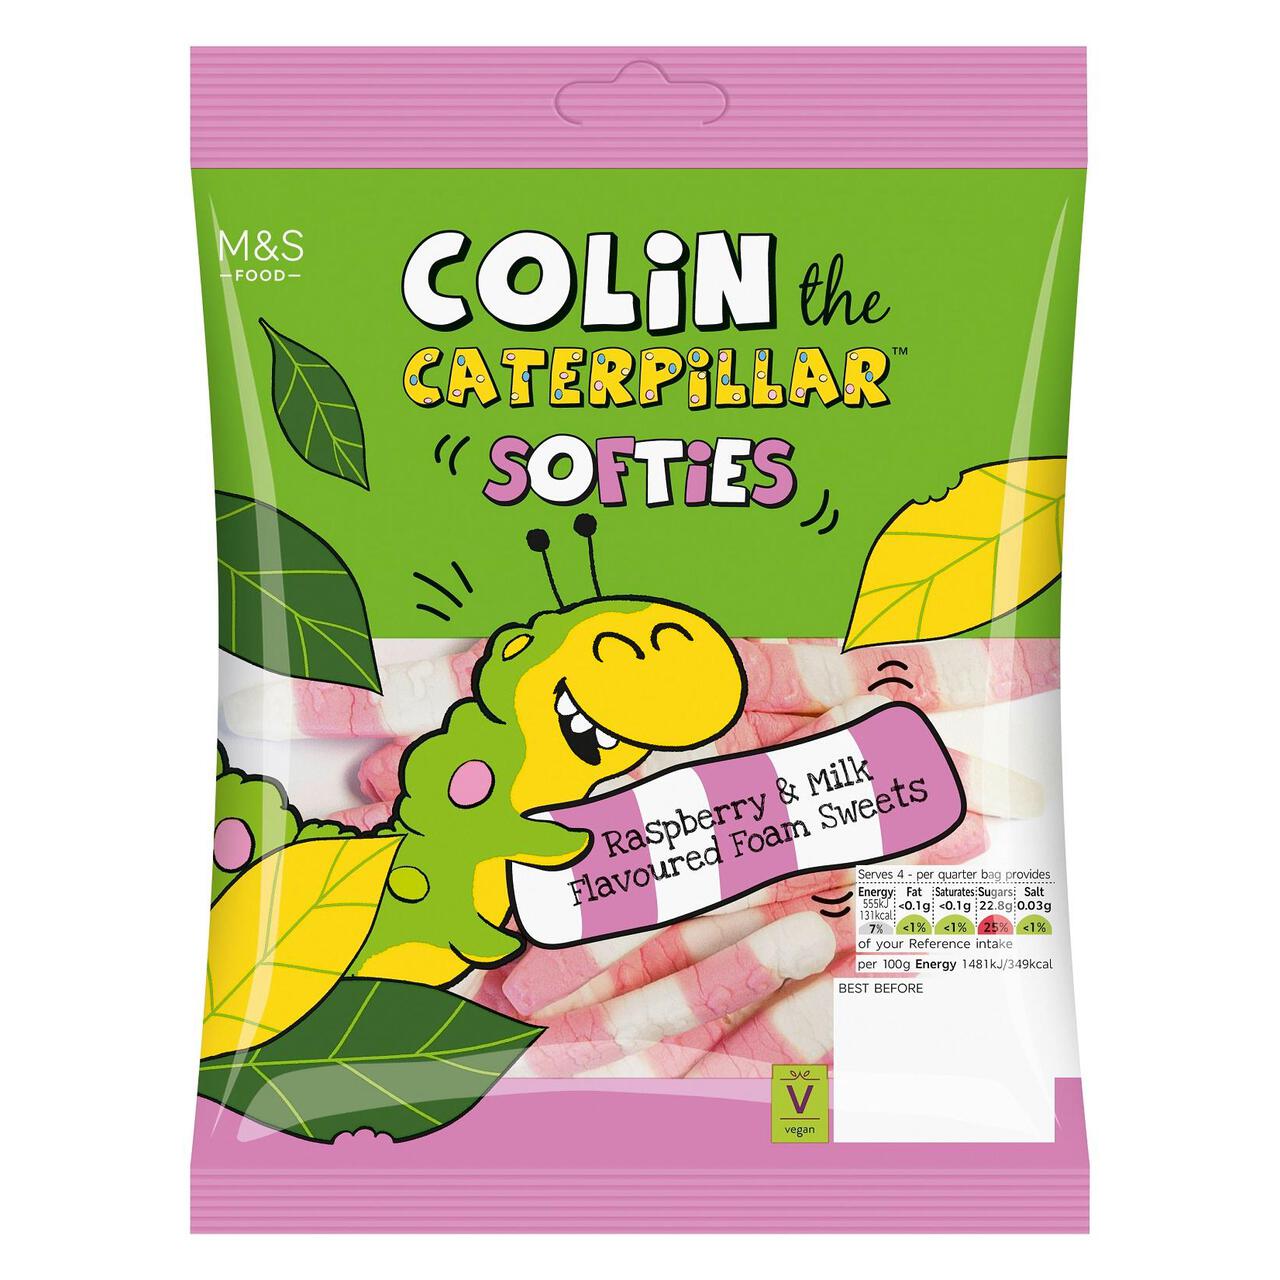 M&S Colin The Caterpillar Softies 150g